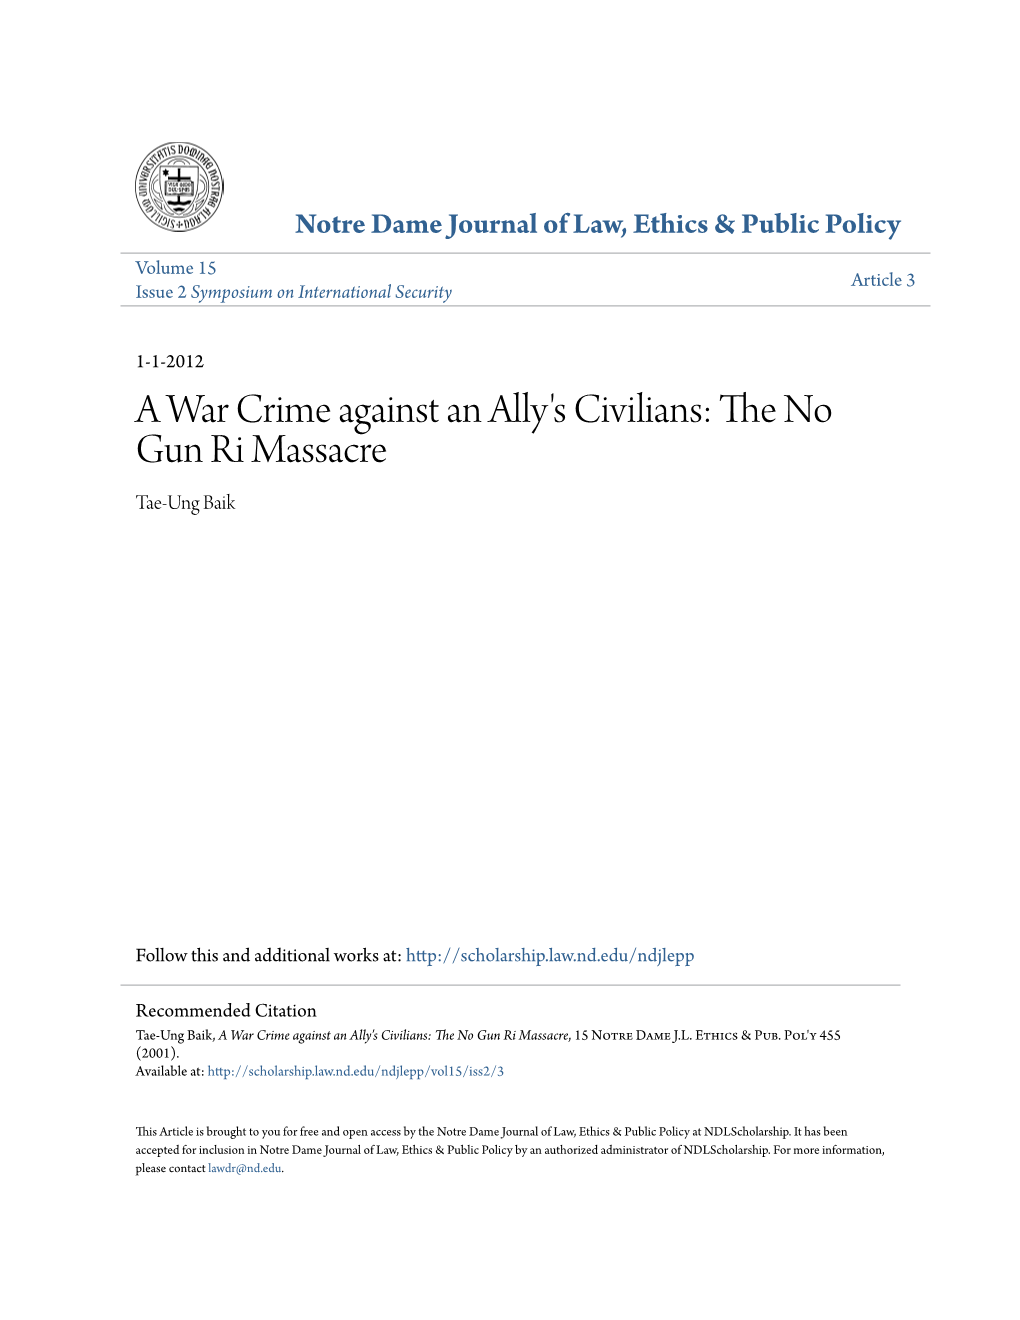 A War Crime Against an Ally's Civilians: the No Gun Ri Massacre, 15 Notre Dame J.L